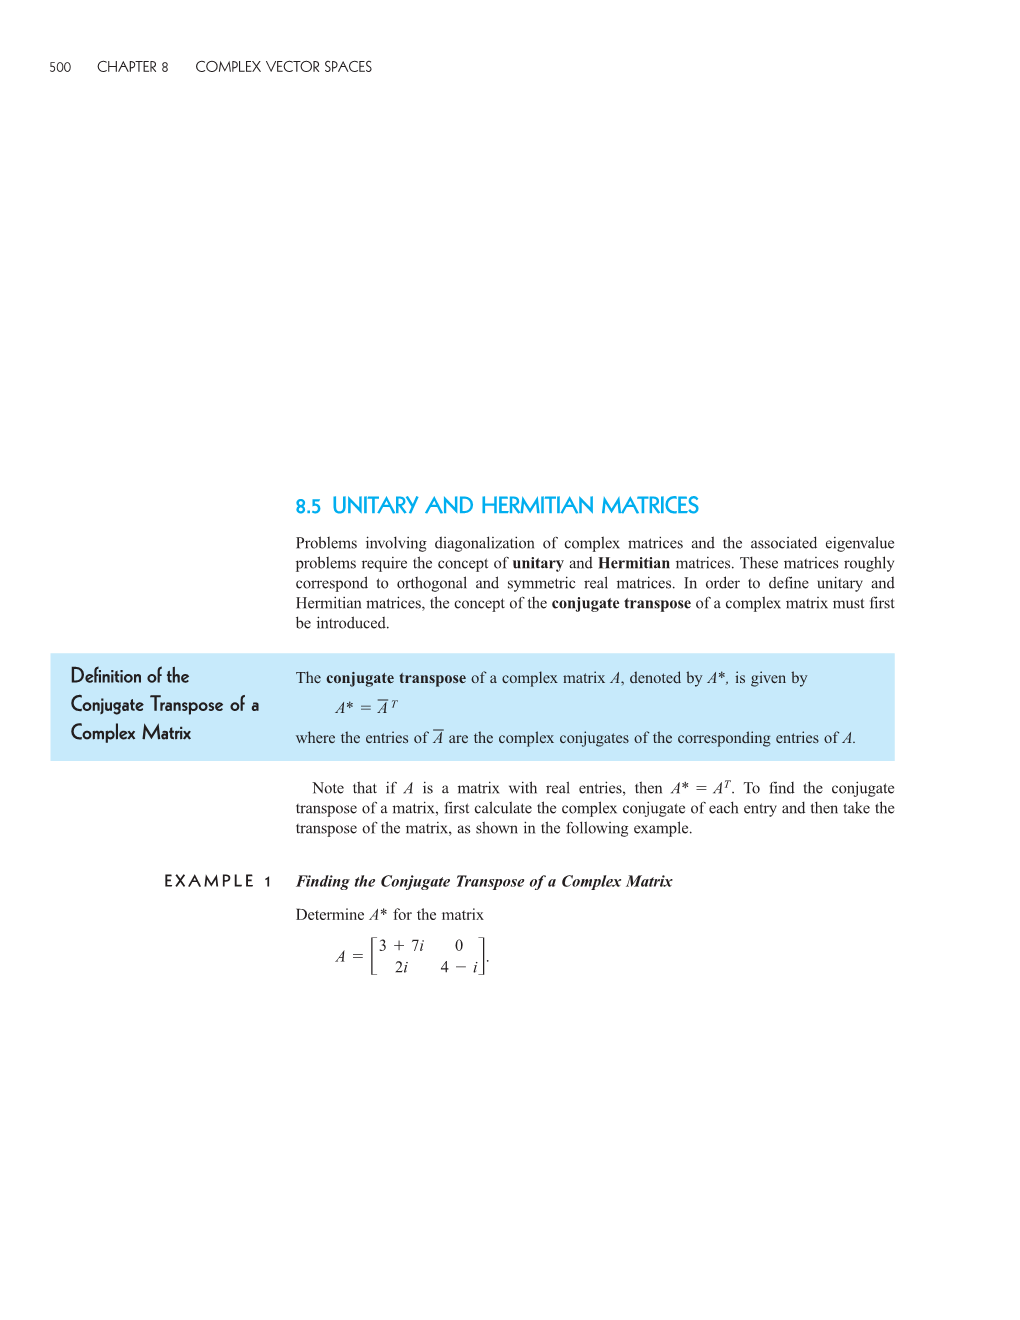 8.5 Unitary and Hermitian Matrices